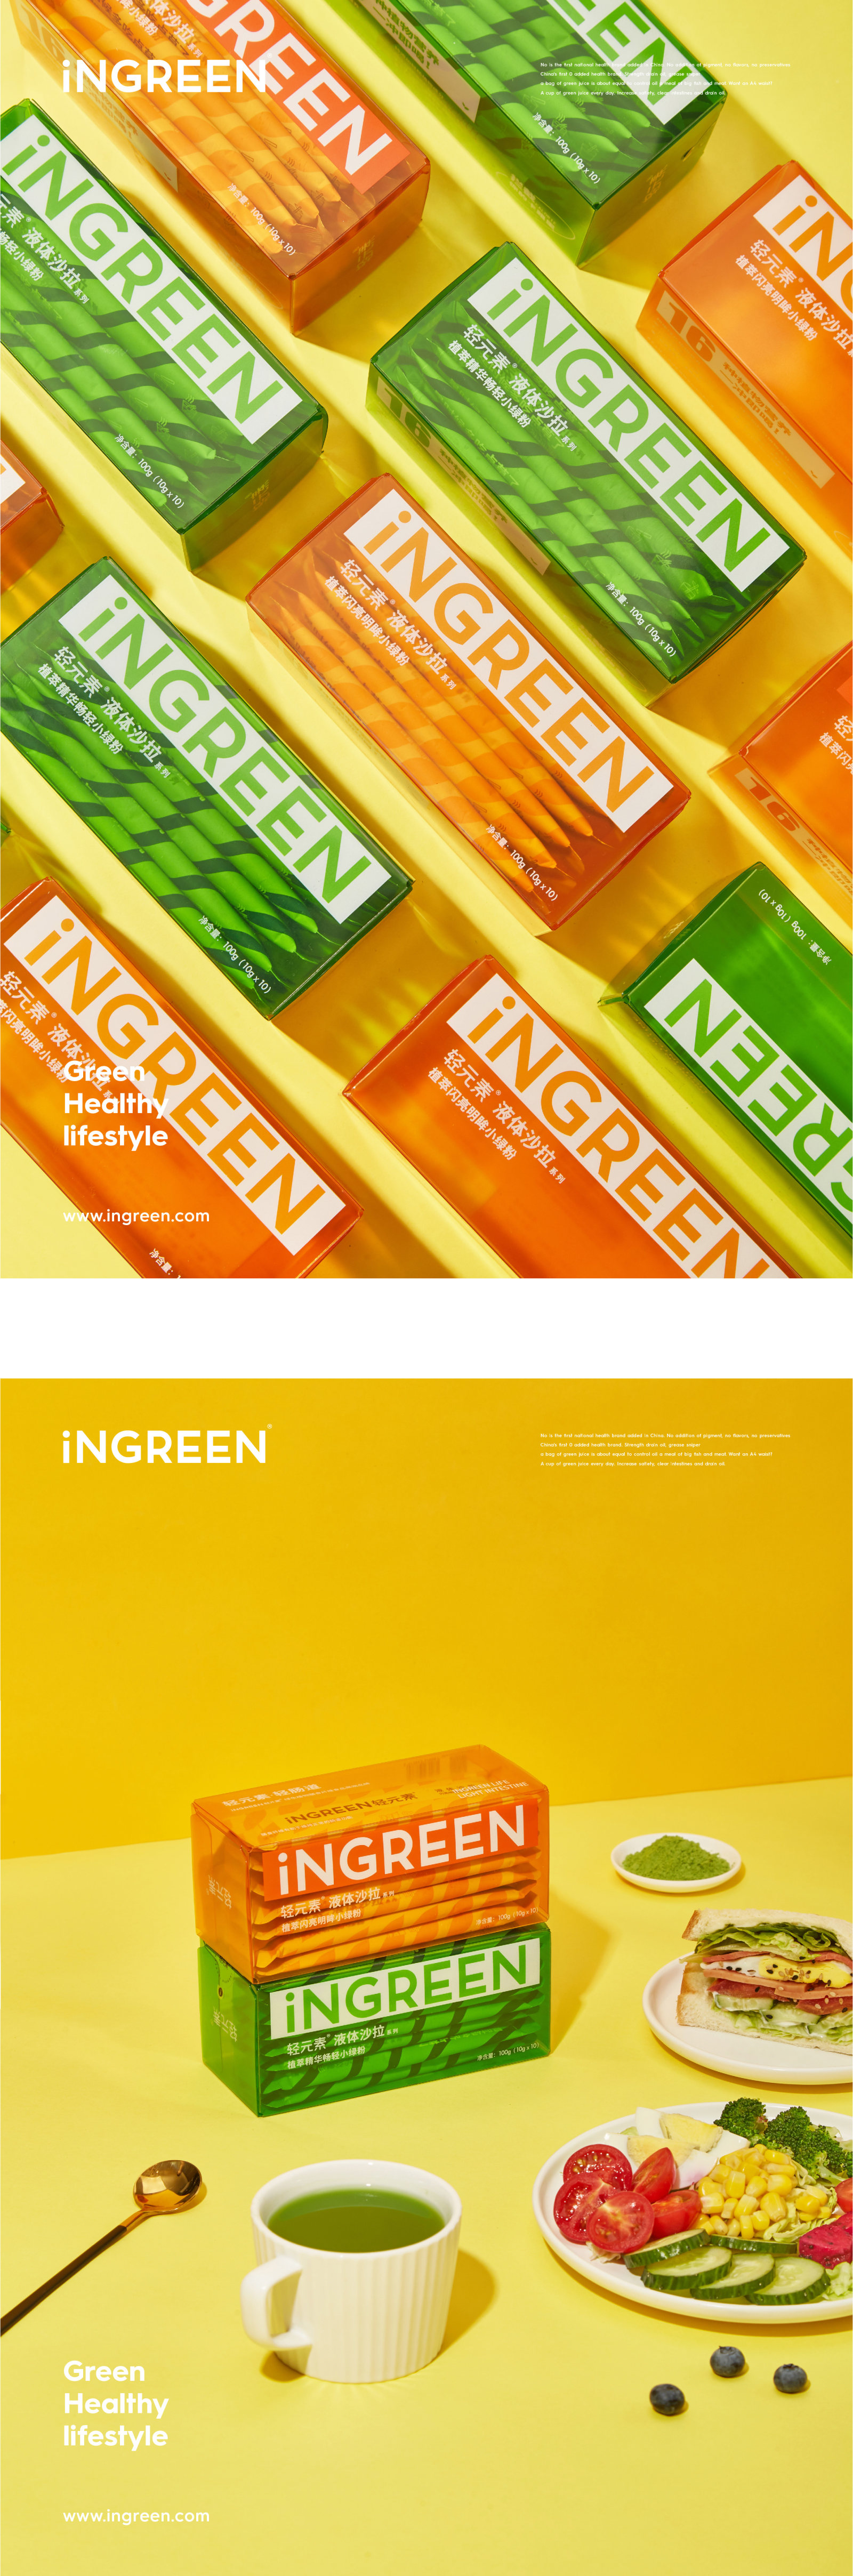 INGREEN 轻元素 - 青汁品牌设计